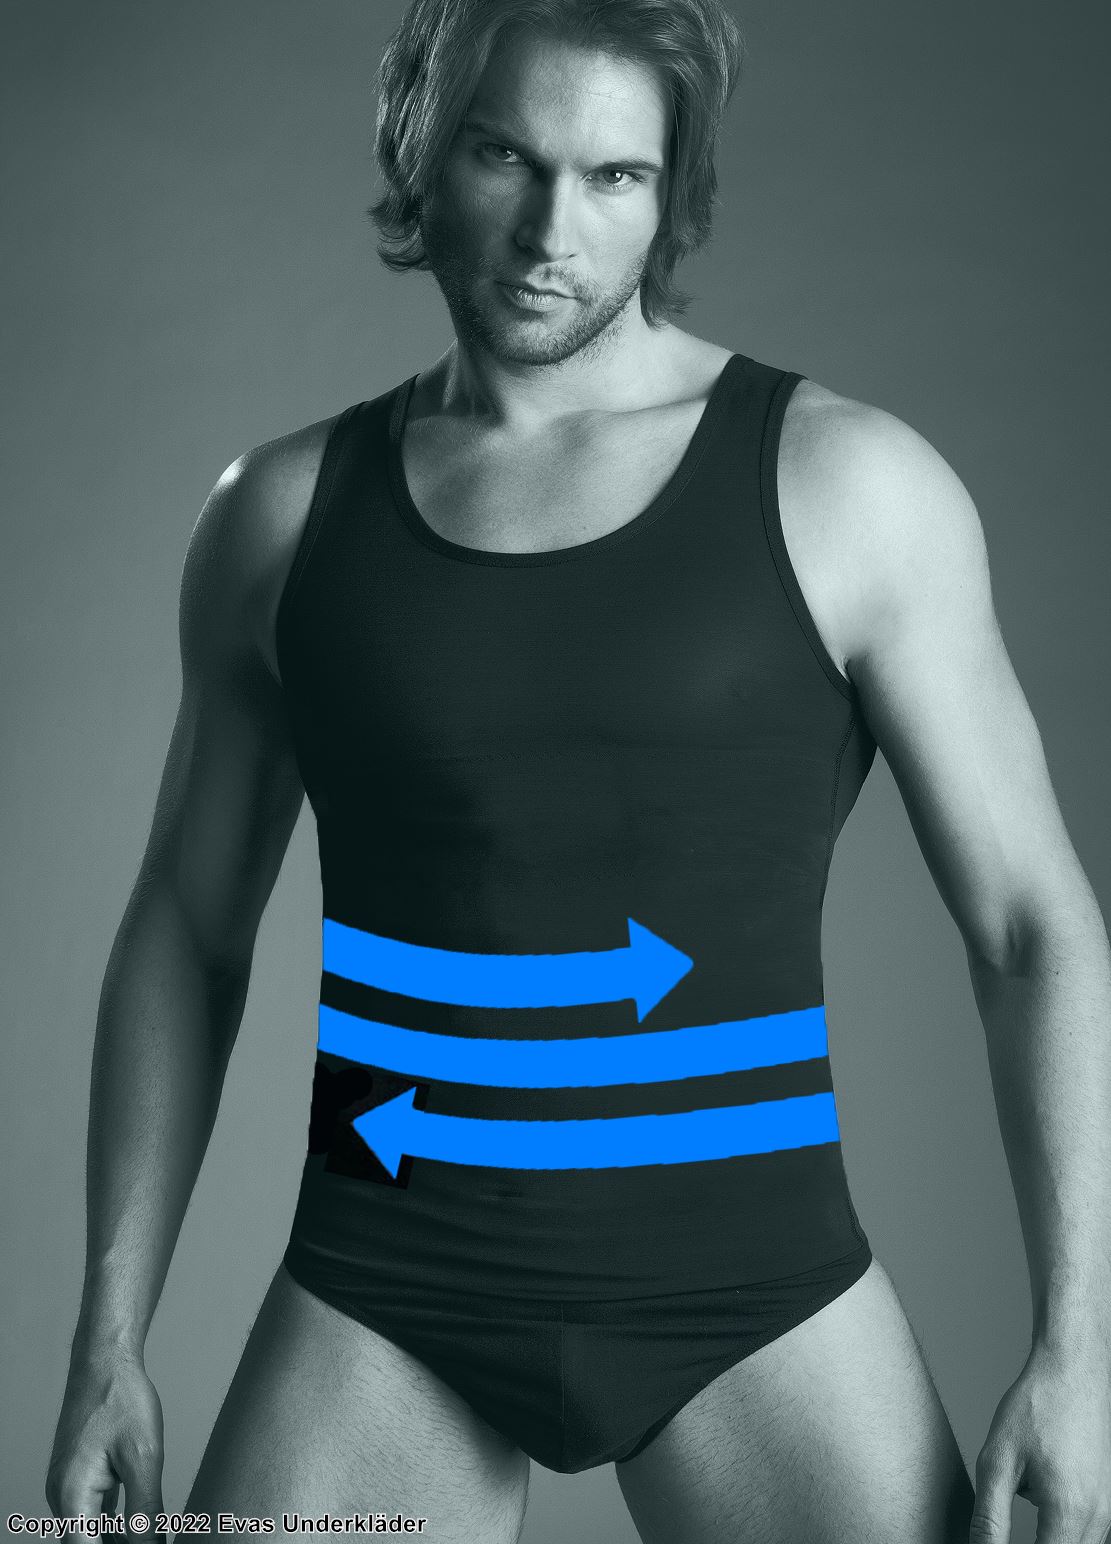 Men T-shirt Male Body Shaper Compression Shapewear Fitness Tummy